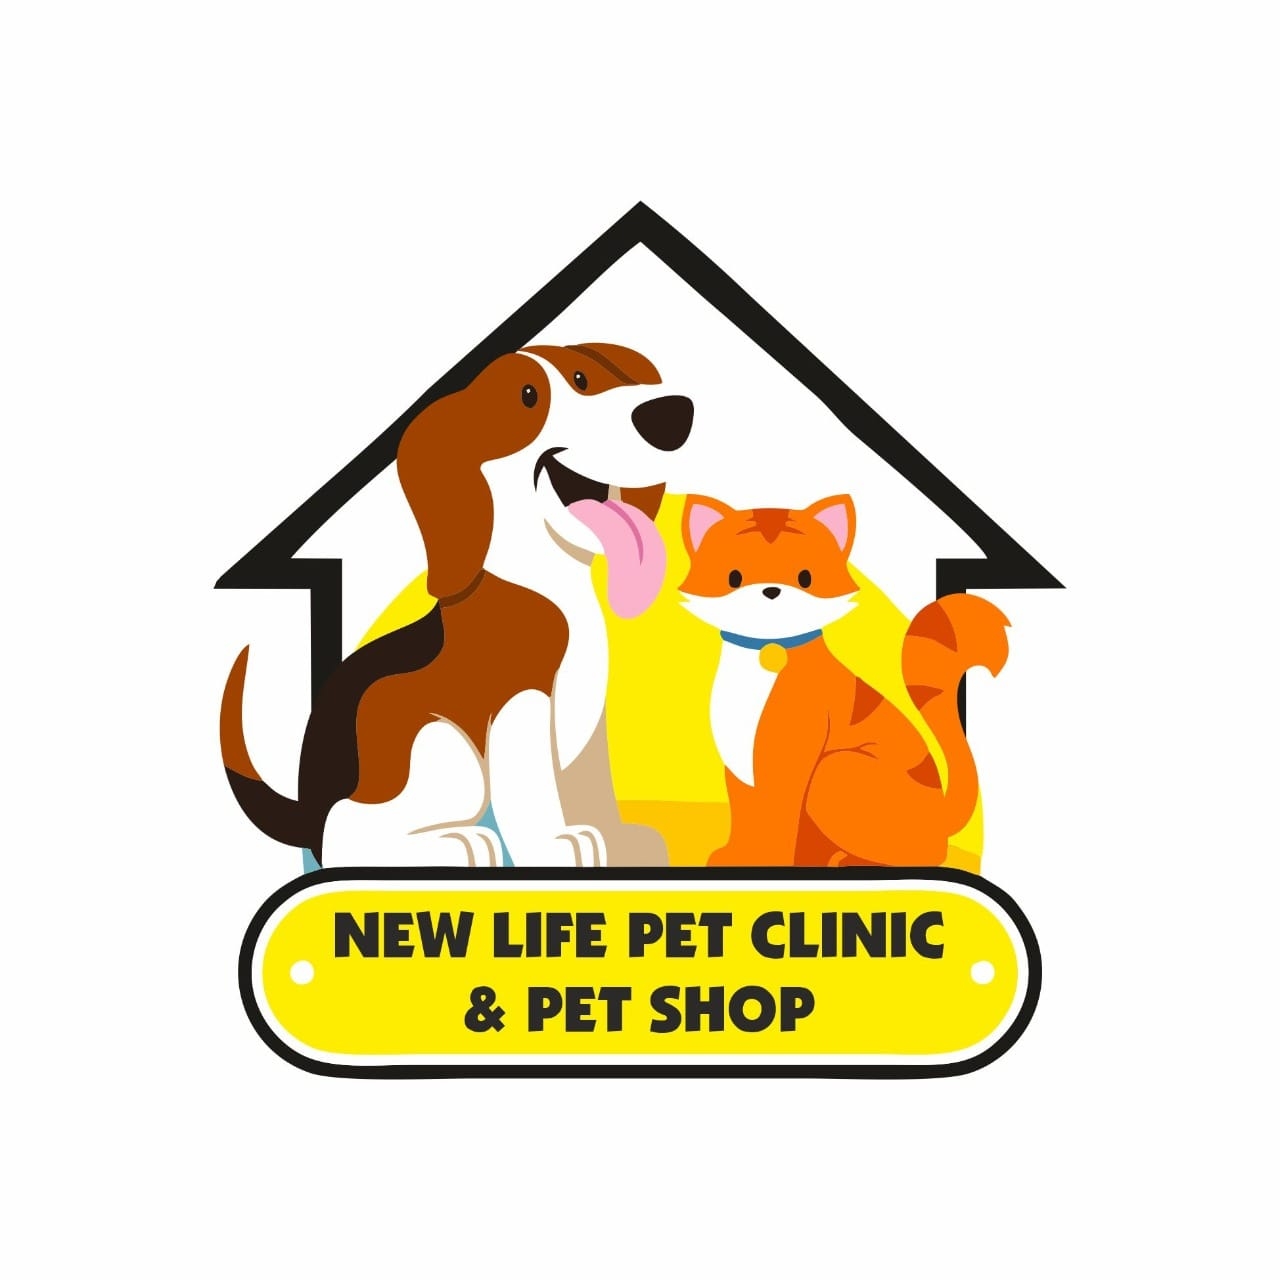 New life pet clinic & pet shop|Diagnostic centre|Medical Services